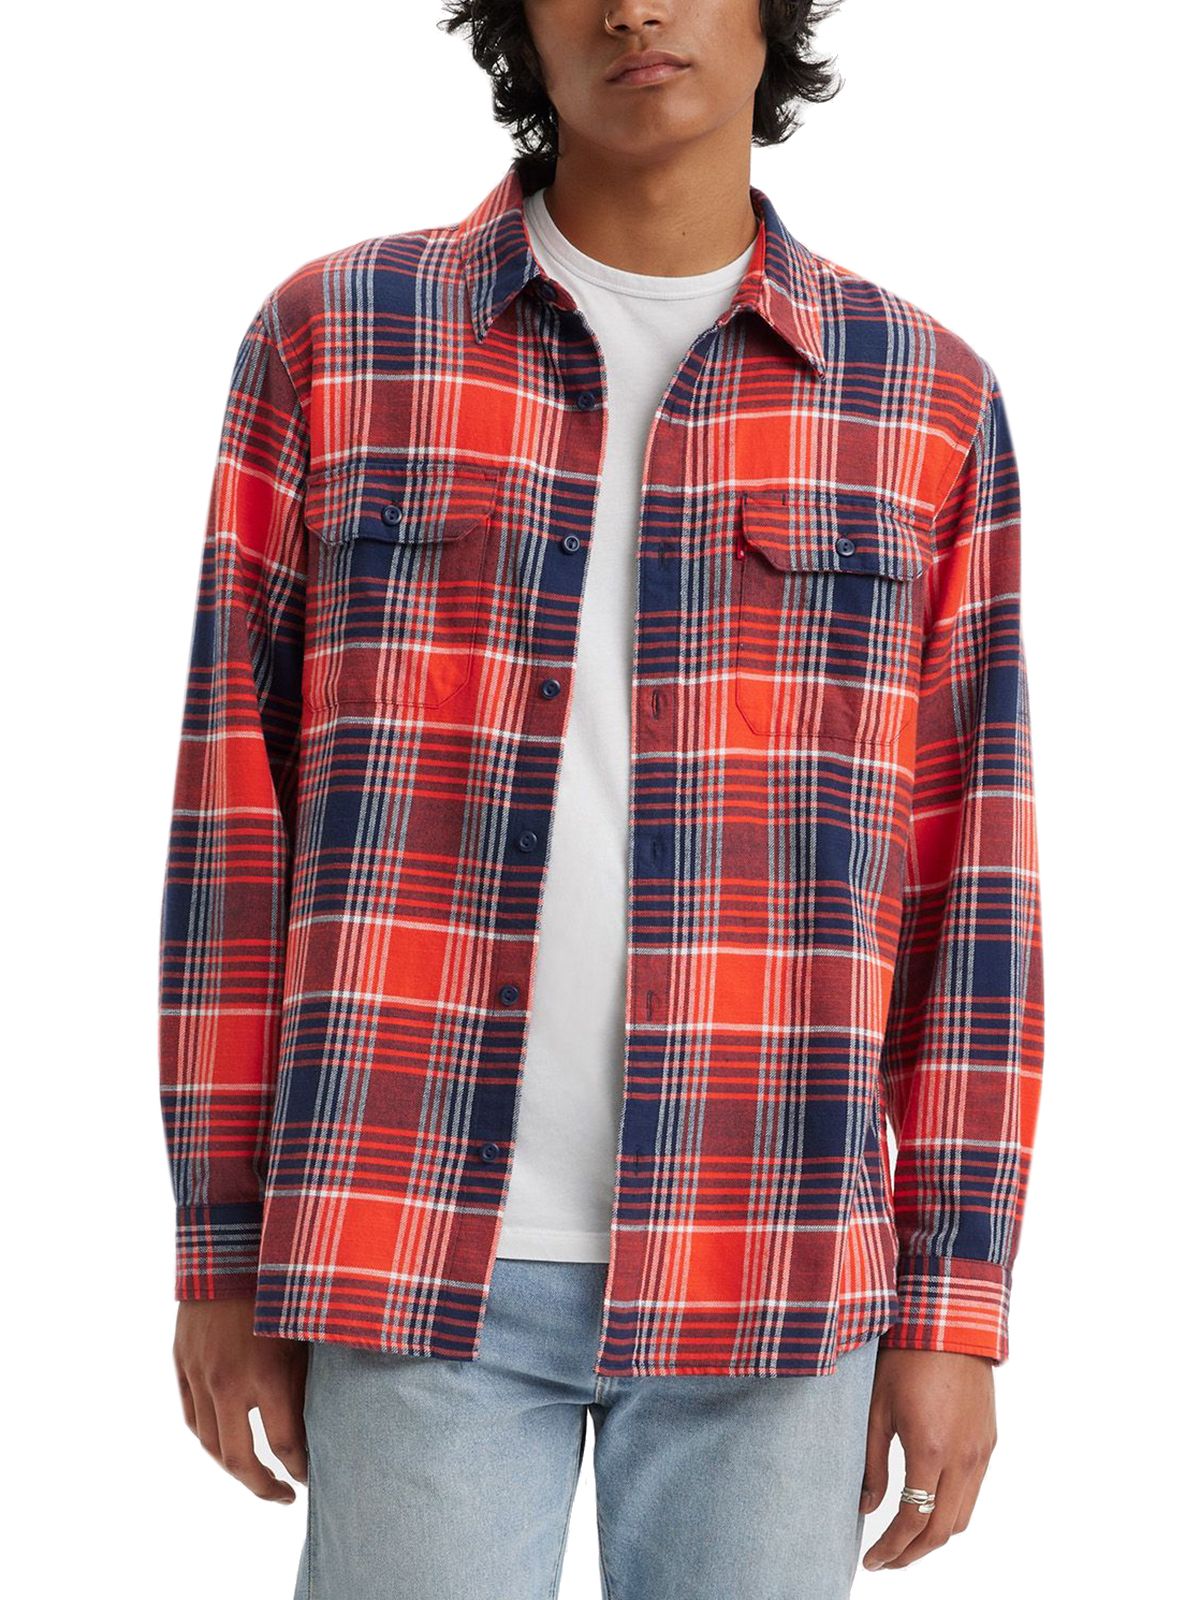 Camicie casual Uomo Levi's - Jackson Worker Shirt - Rosso